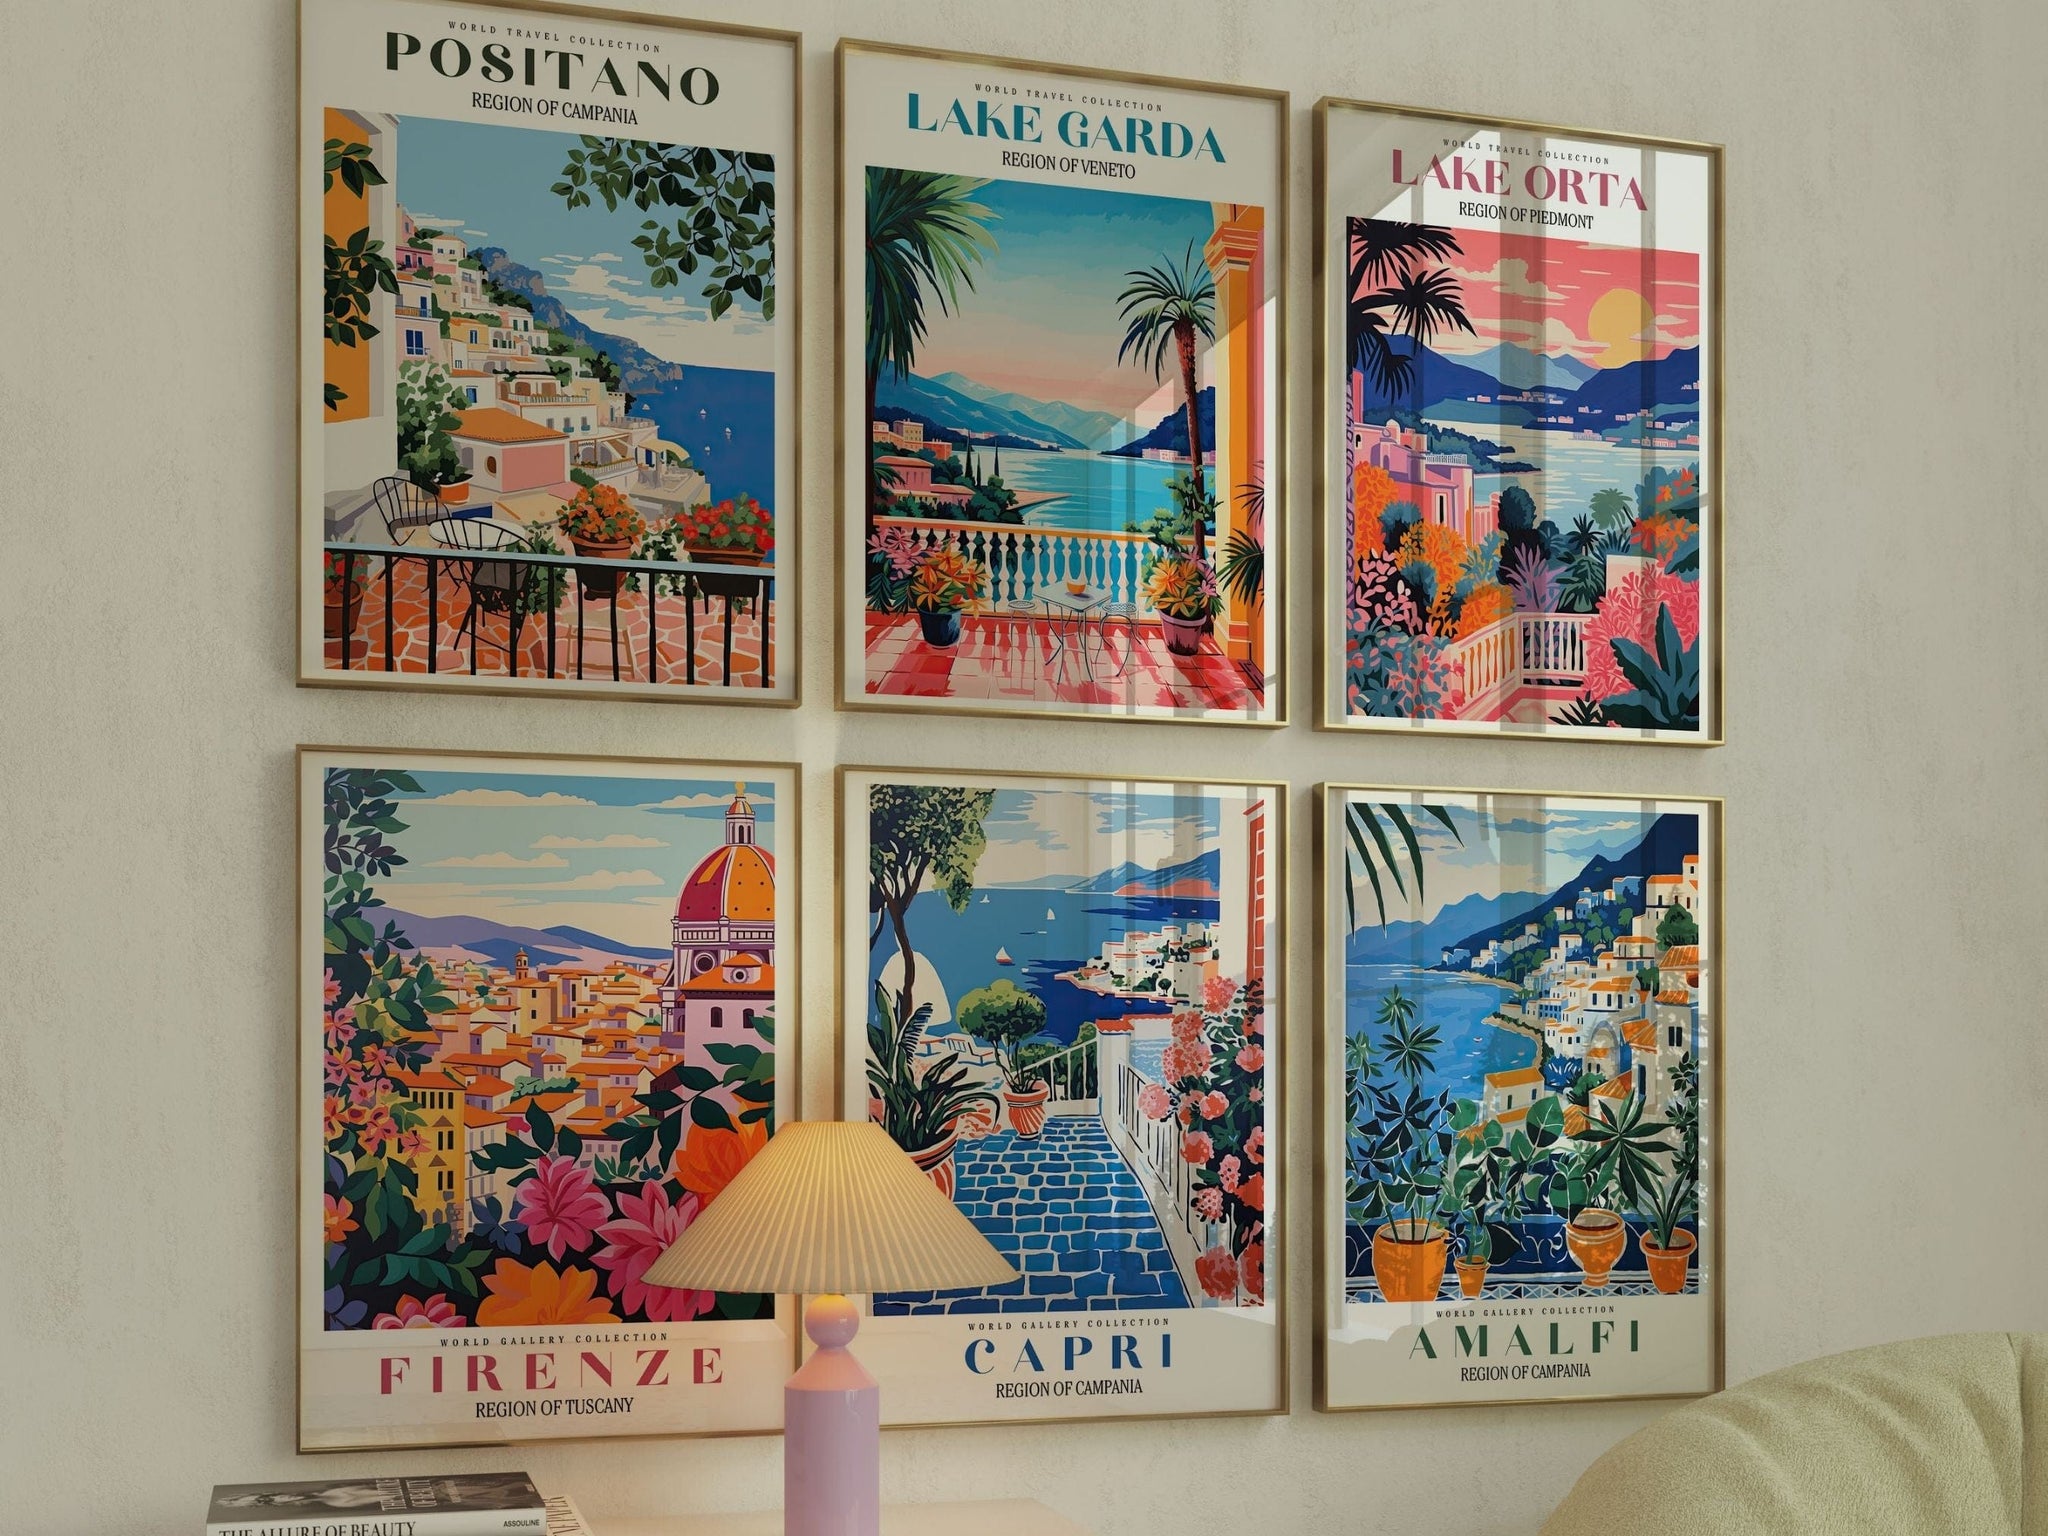 Lake Garda Print, Lake Garda Poster, Lake Garda Painting, Lake Garde Travel Poster,  Italy Travel Poster, Lake Garda Italy, Italian Print